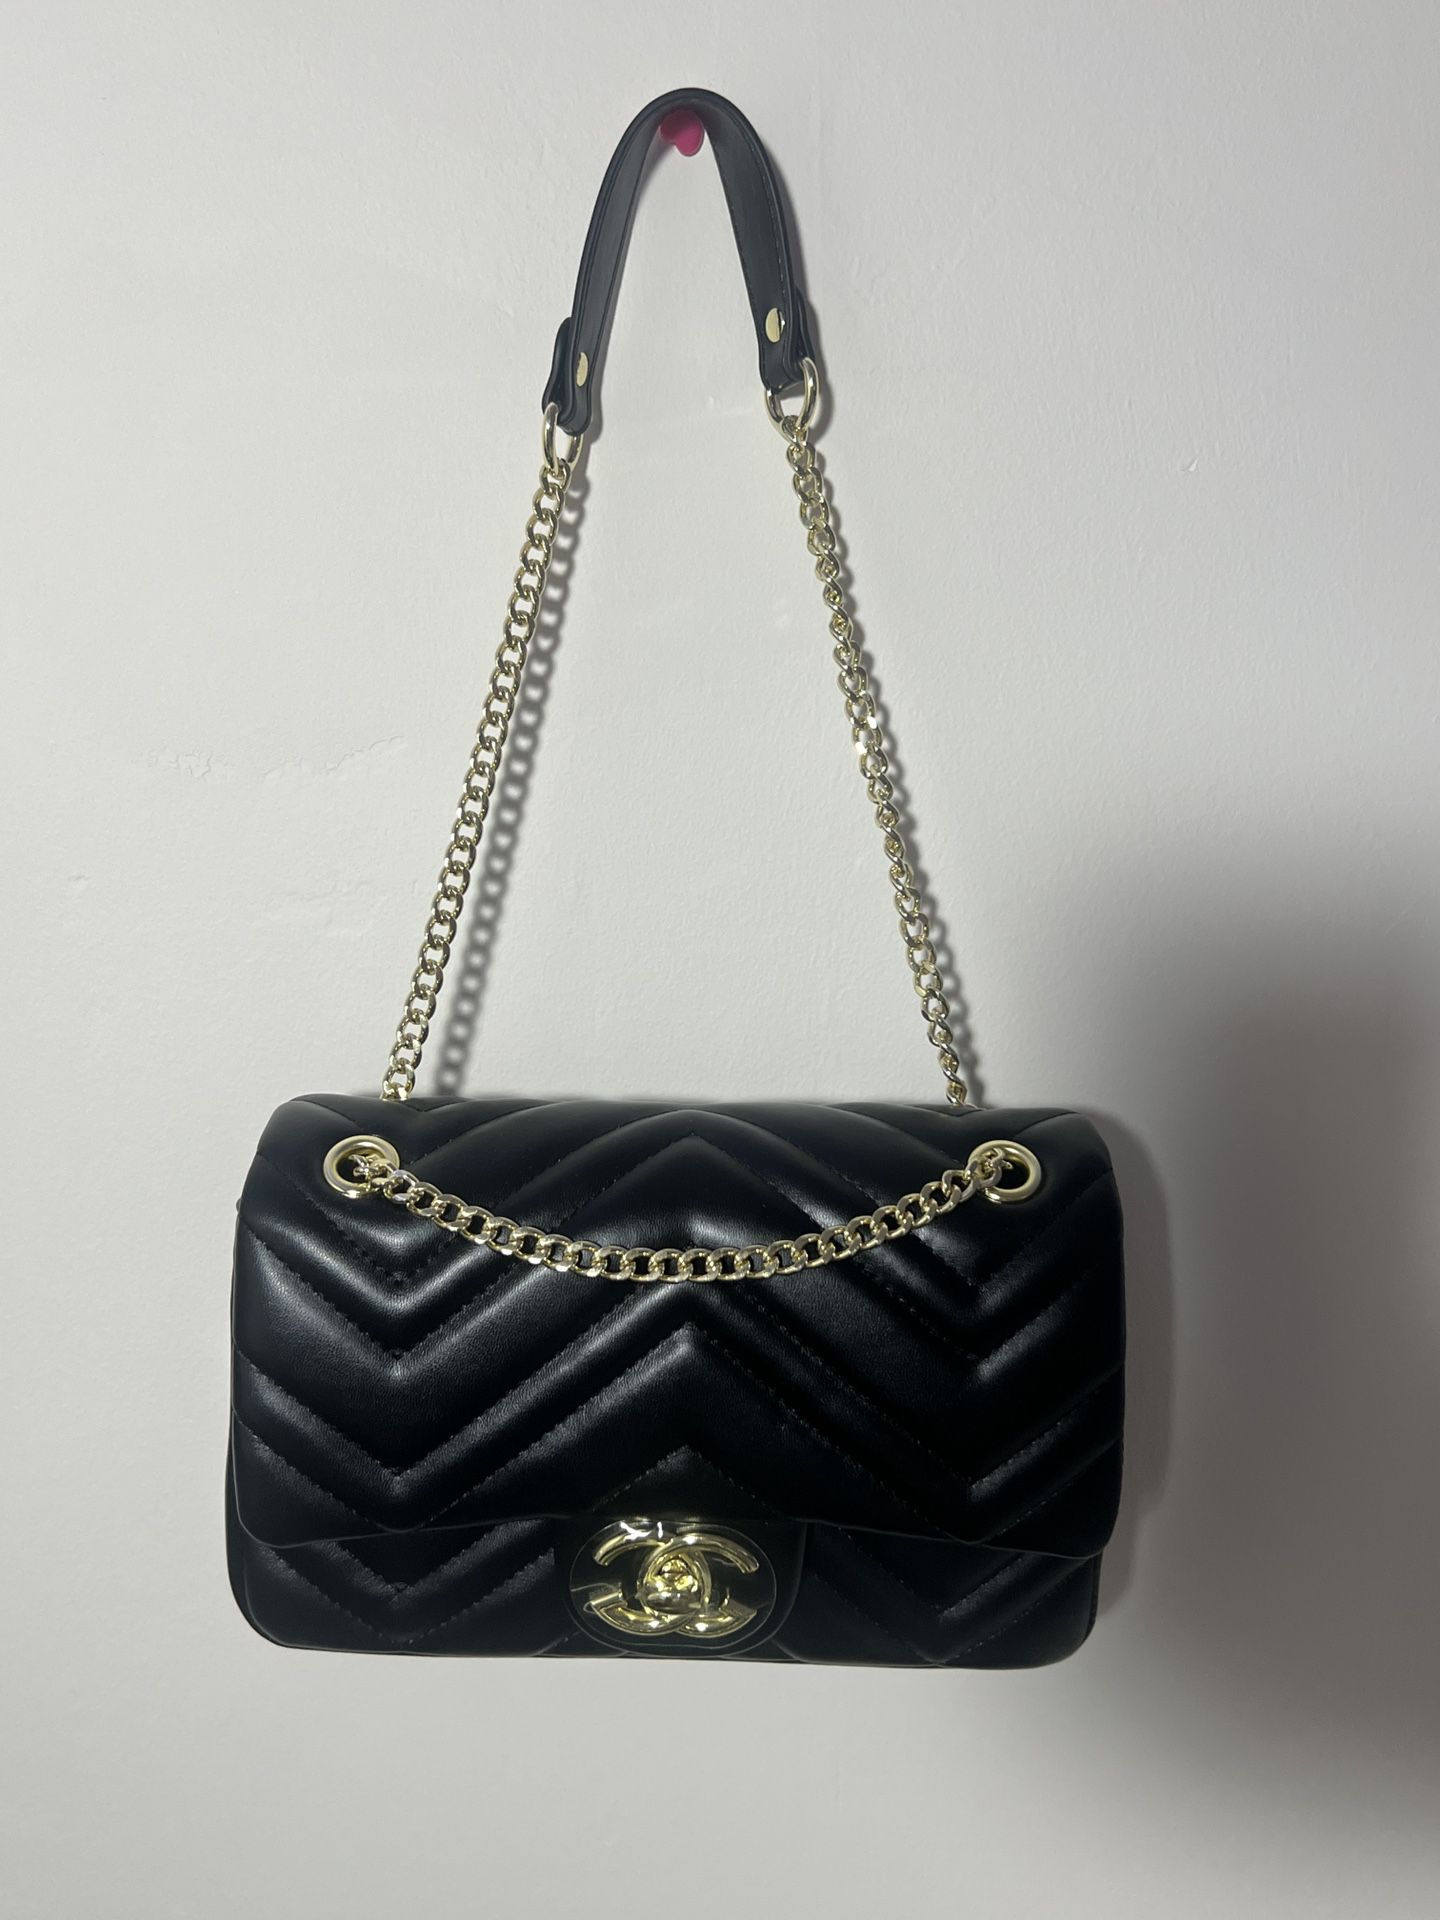 Chanel Women’s Bag Black